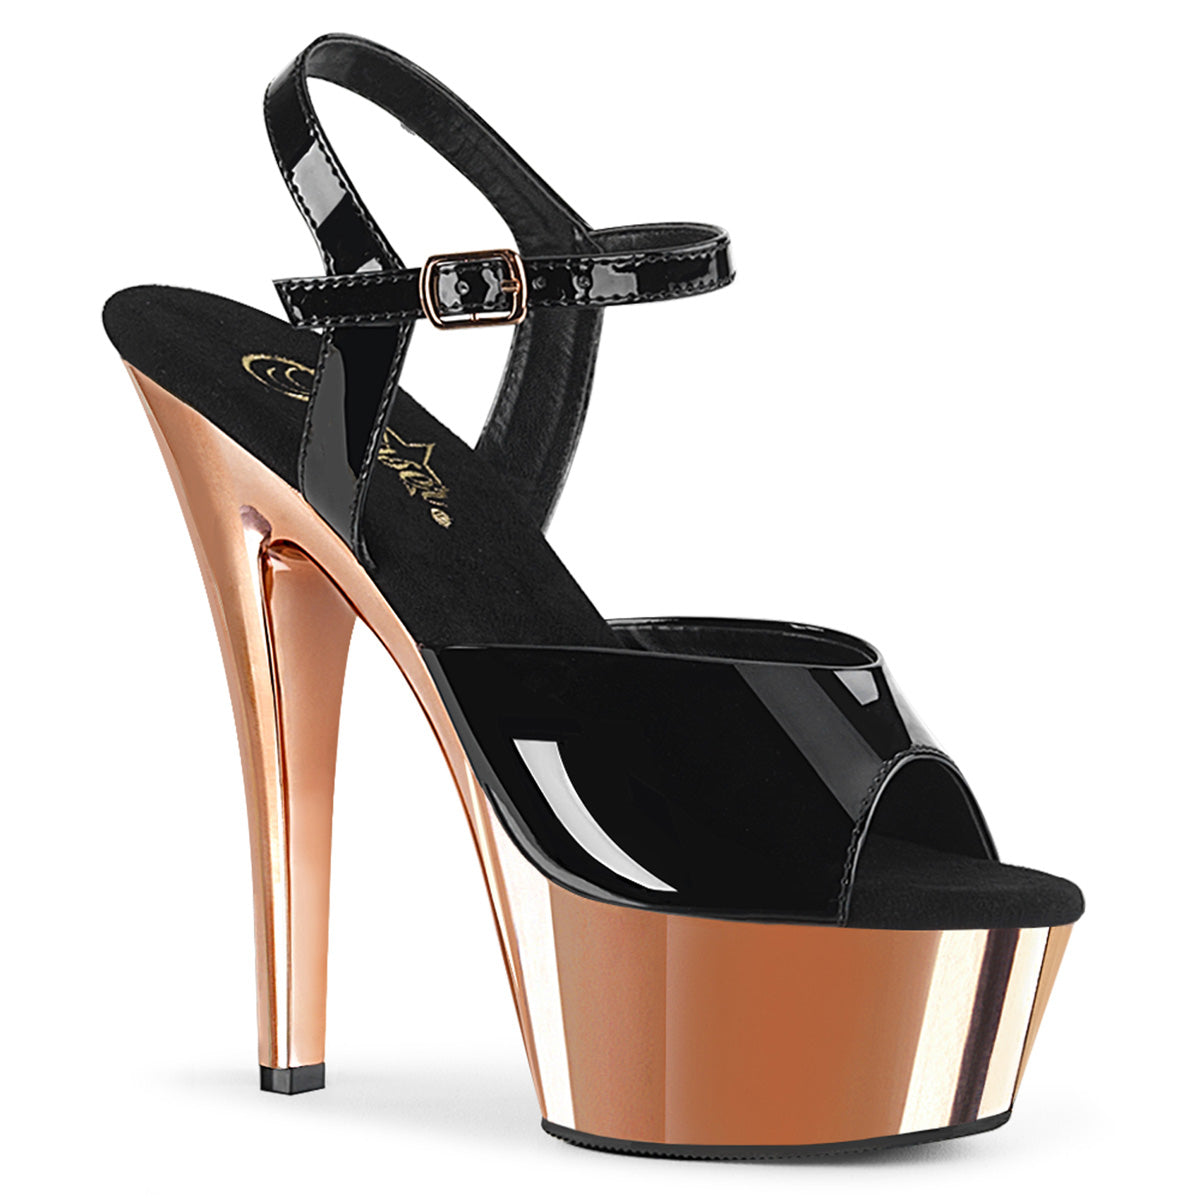 KISS-209 Black Patent/Rose Gold Chrome Platform Sandal Pleaser